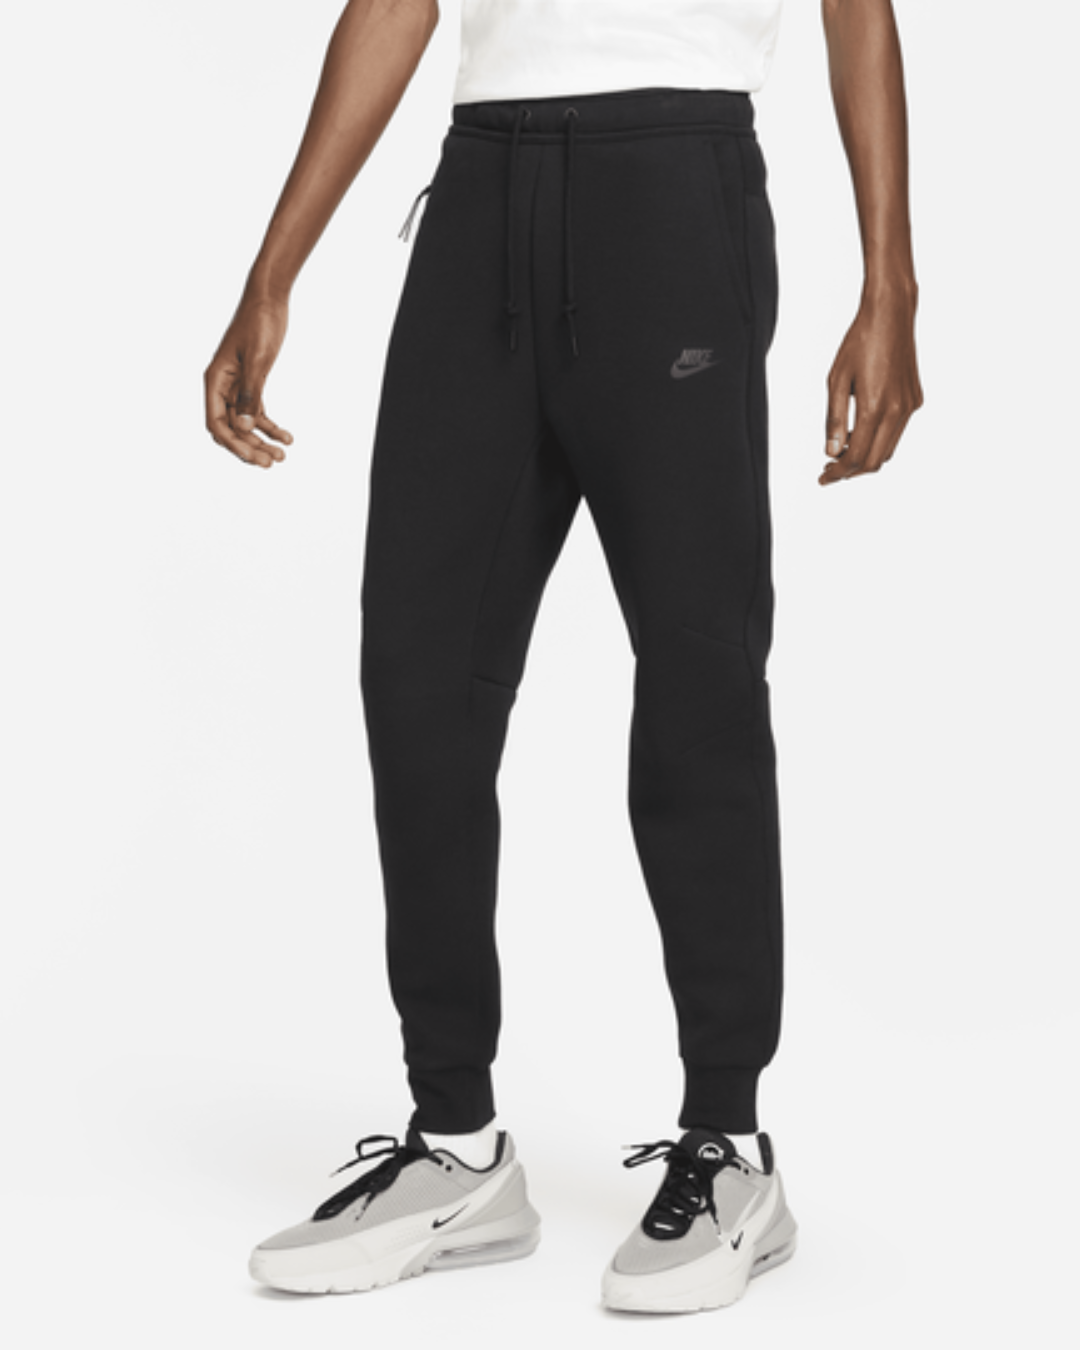 Nike Tech Fleece Pants - Black/Black